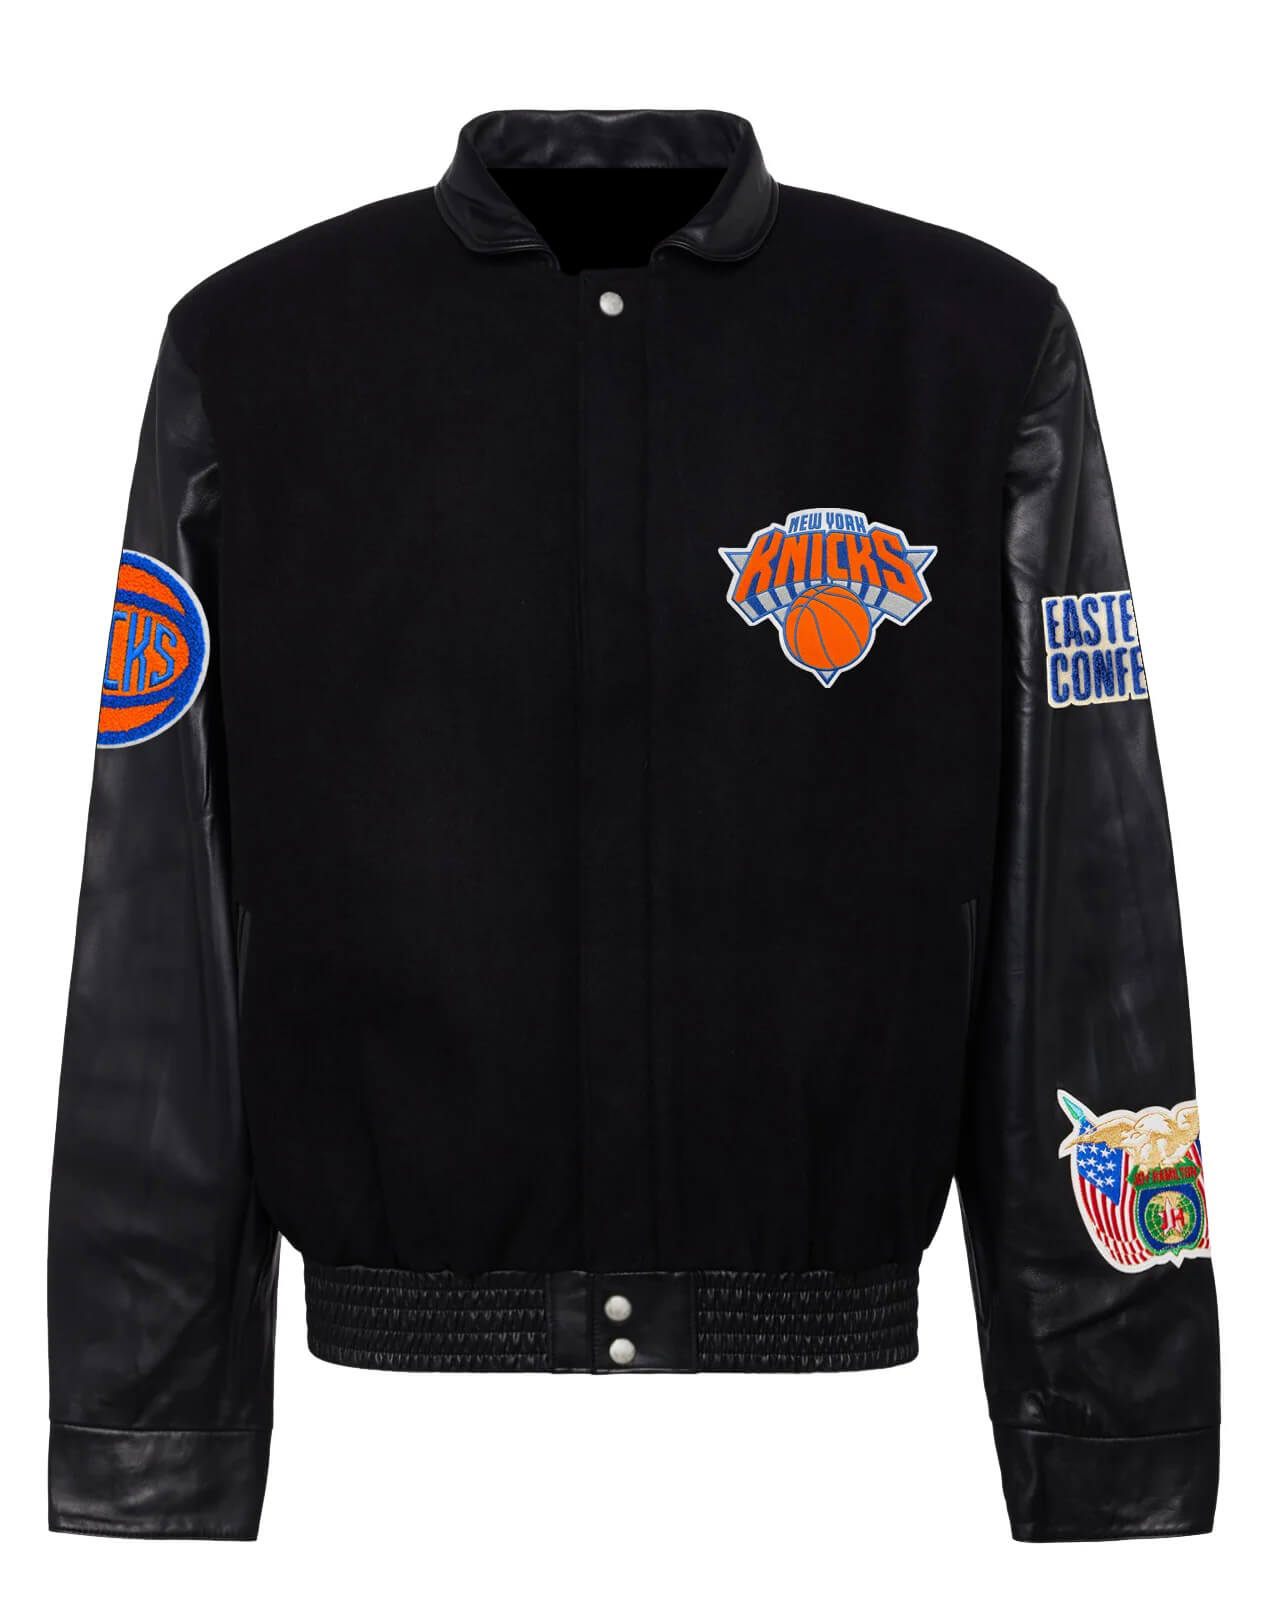 Black New York Knicks NBA Team Varsity Jacket - Maker of Jacket